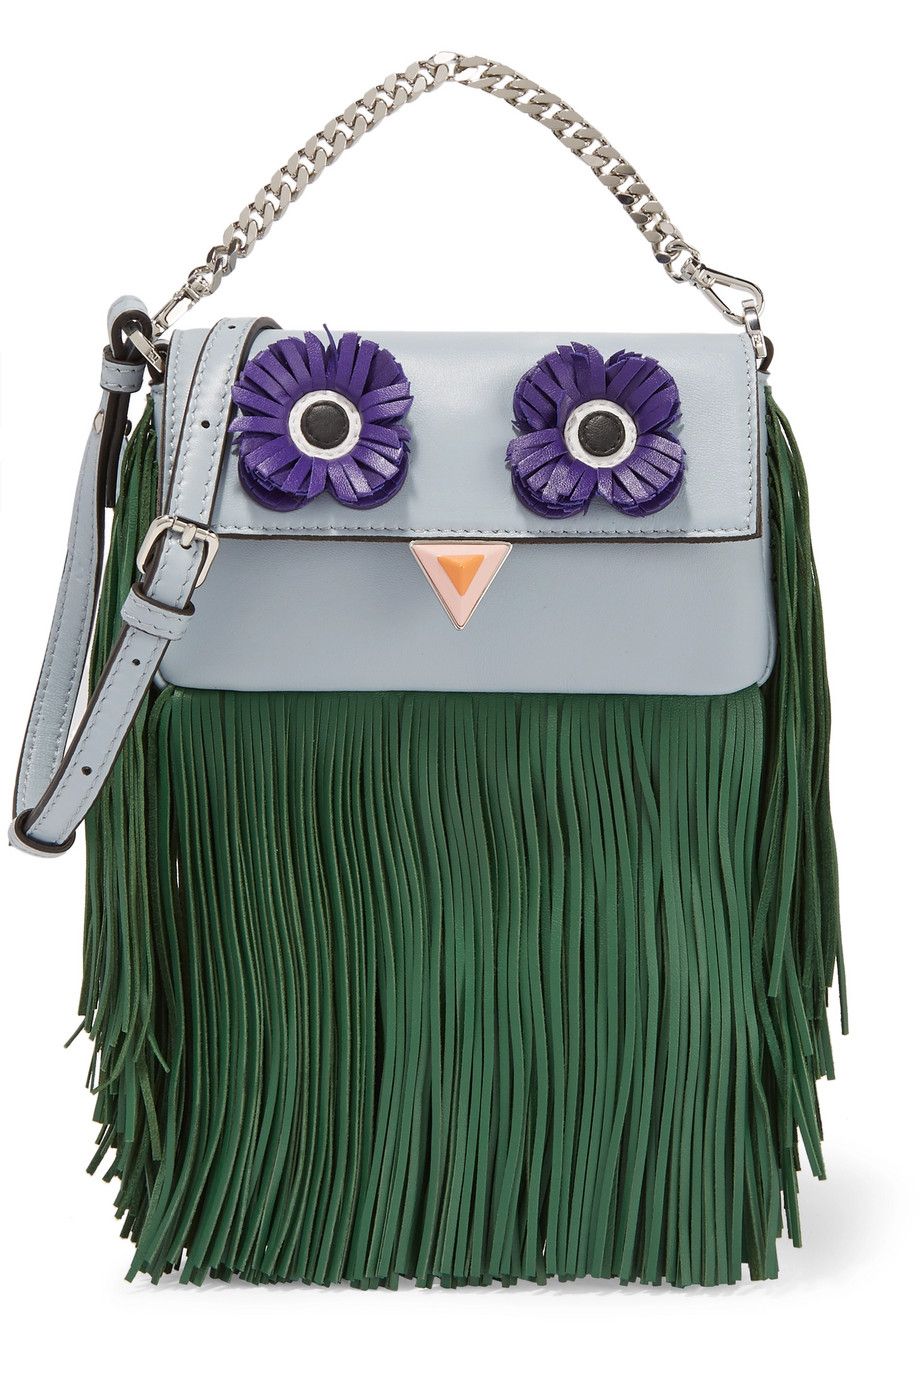 Bag, Handbag, Shoulder bag, Green, Fashion accessory, Purple, Violet, Turquoise, Leather, Chain, 